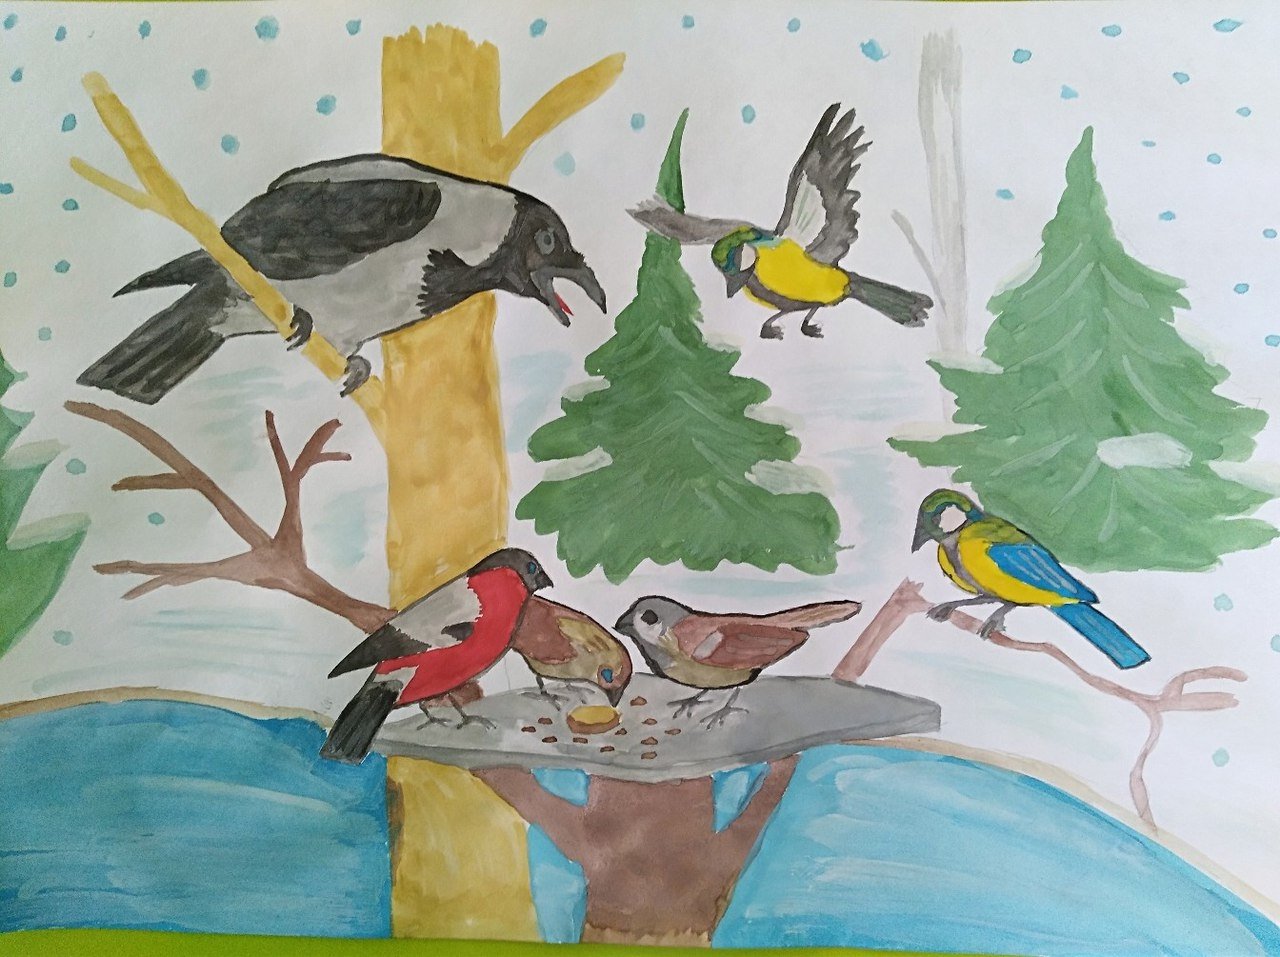 Рисунок зимующие птицы на конкурс